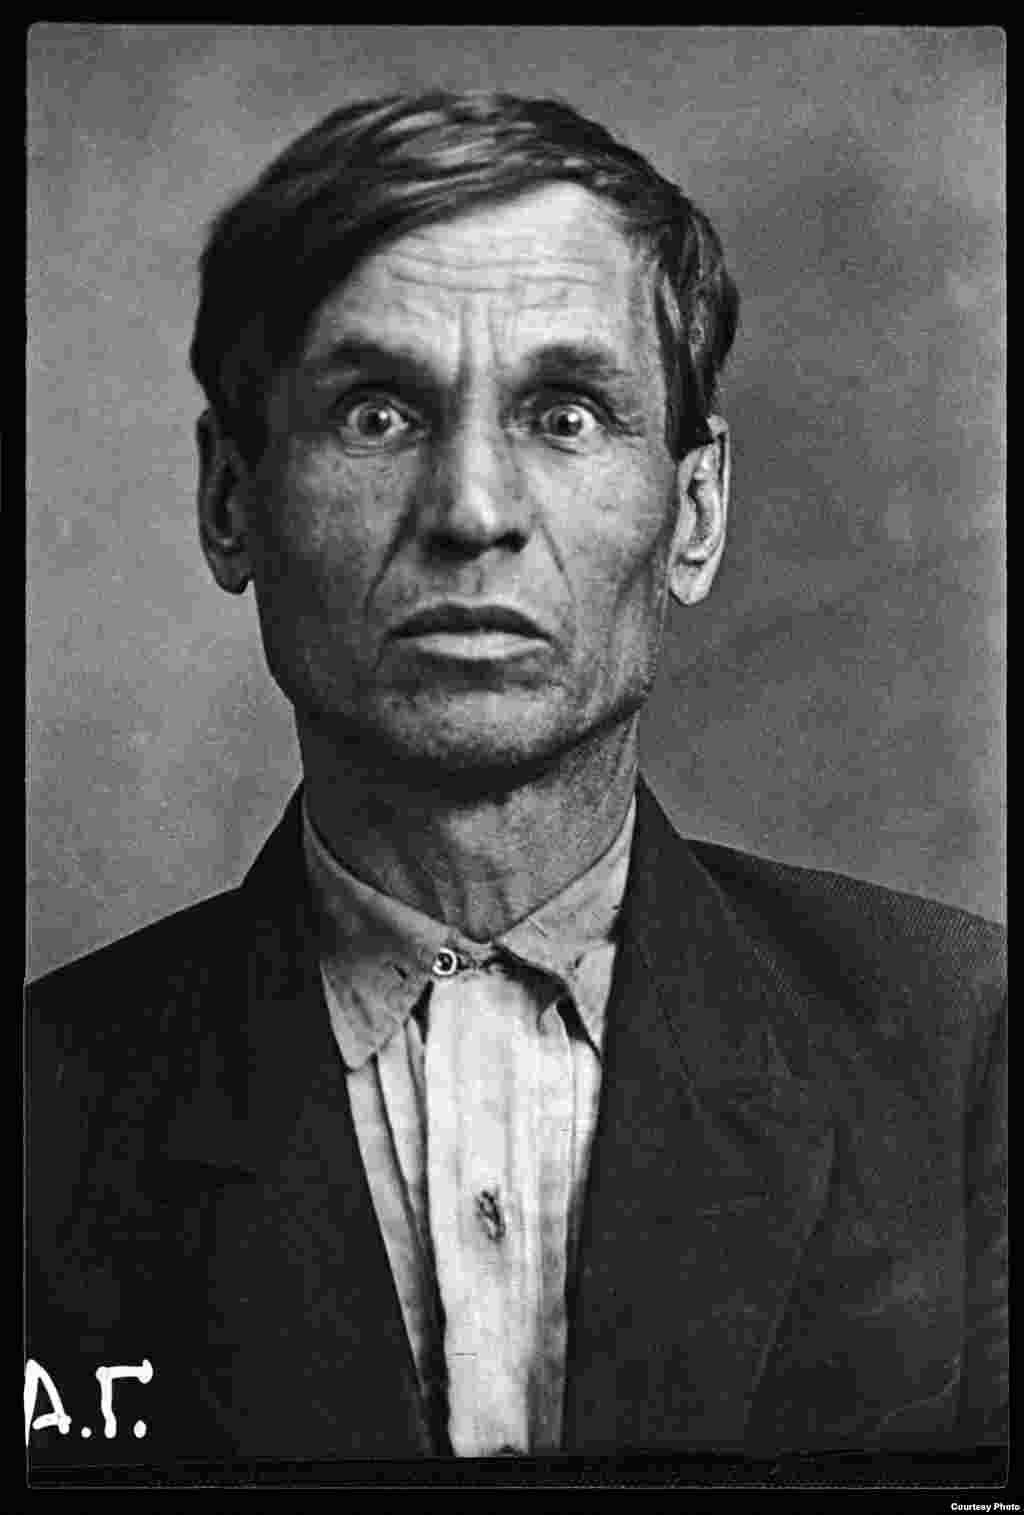 Aleksei Zheltikov: Russian, born 1890, locksmith at the Moscow Metro workshops. Shot on November 1, 1937.